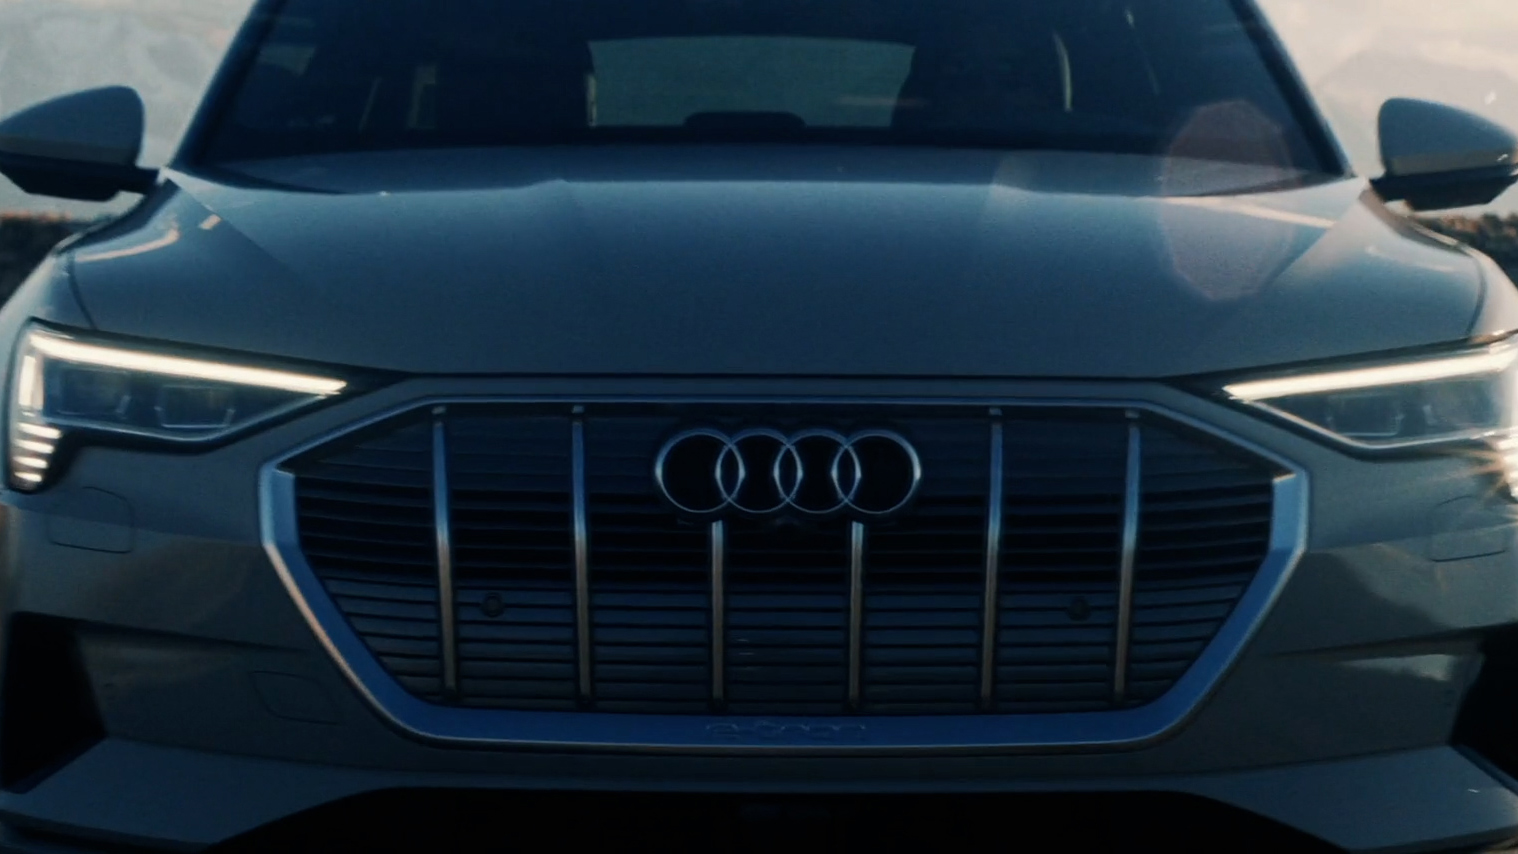 An Audi sedan's front grille.